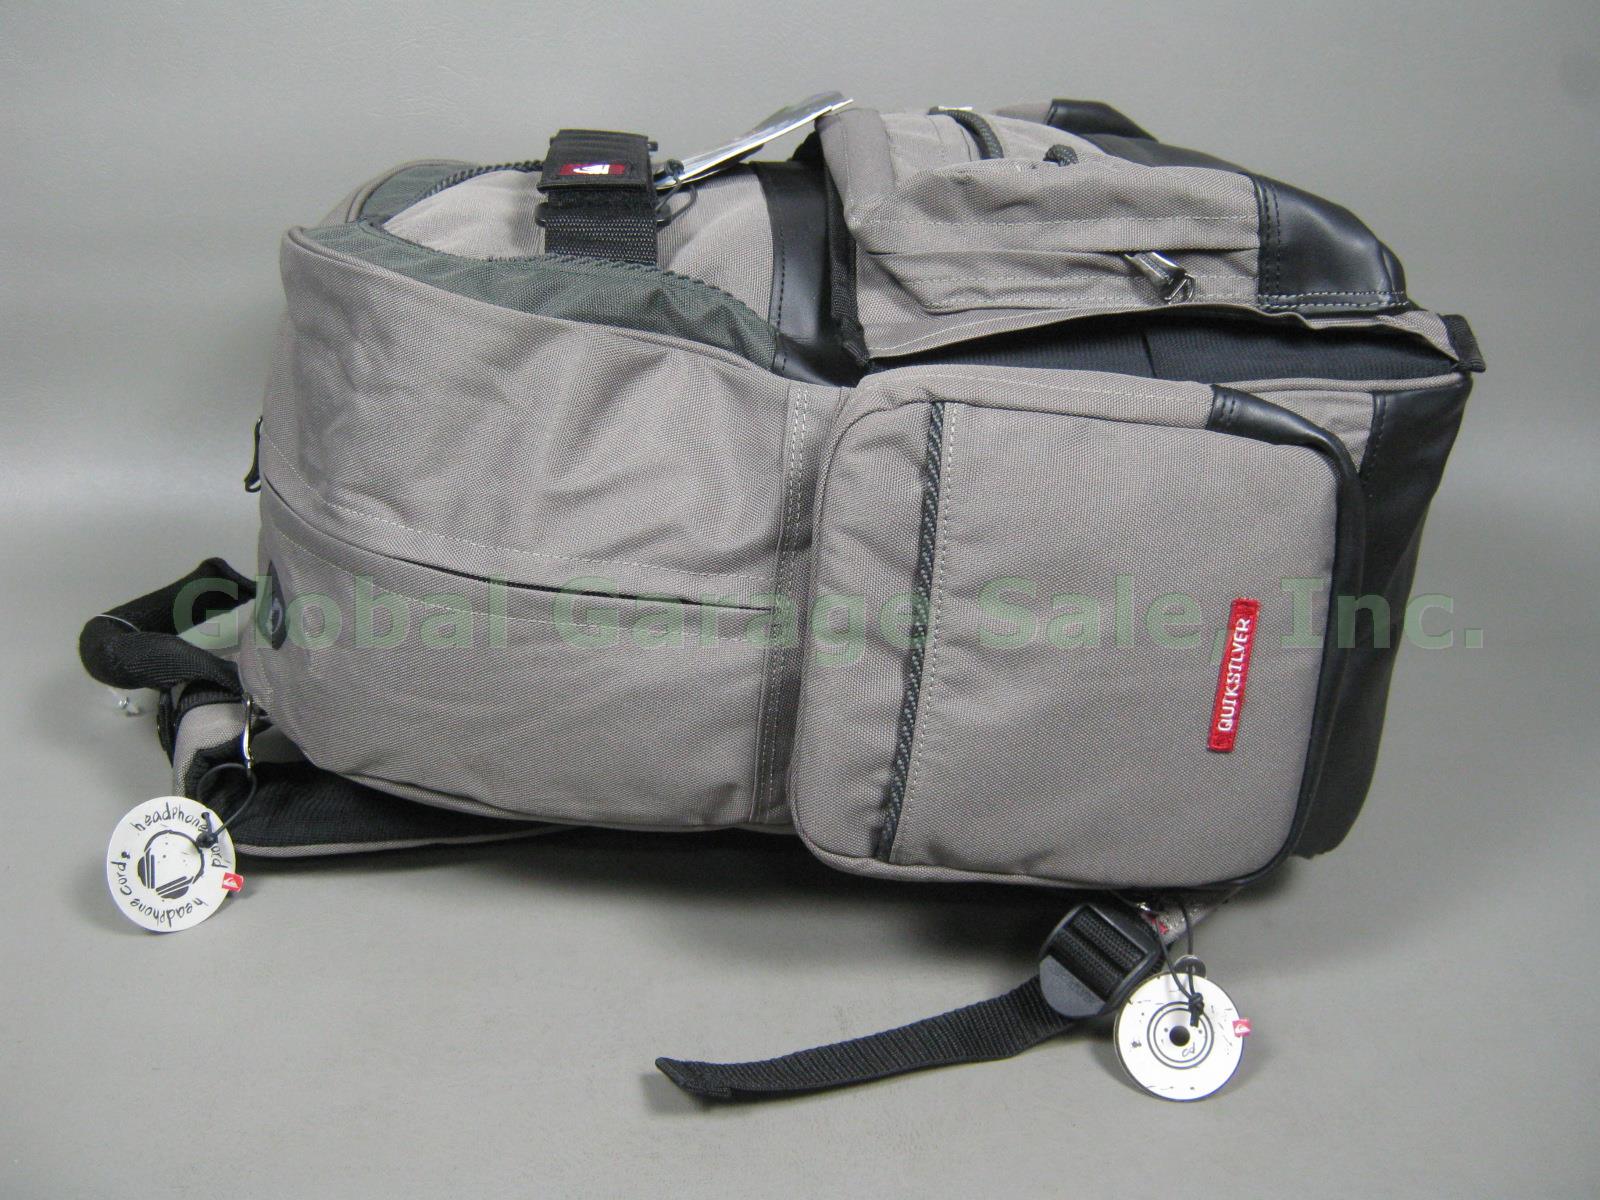 Rare NWT NOS Quiksilver City Pack Skate Bag Backpack Manufacturer Sample No Res! 2